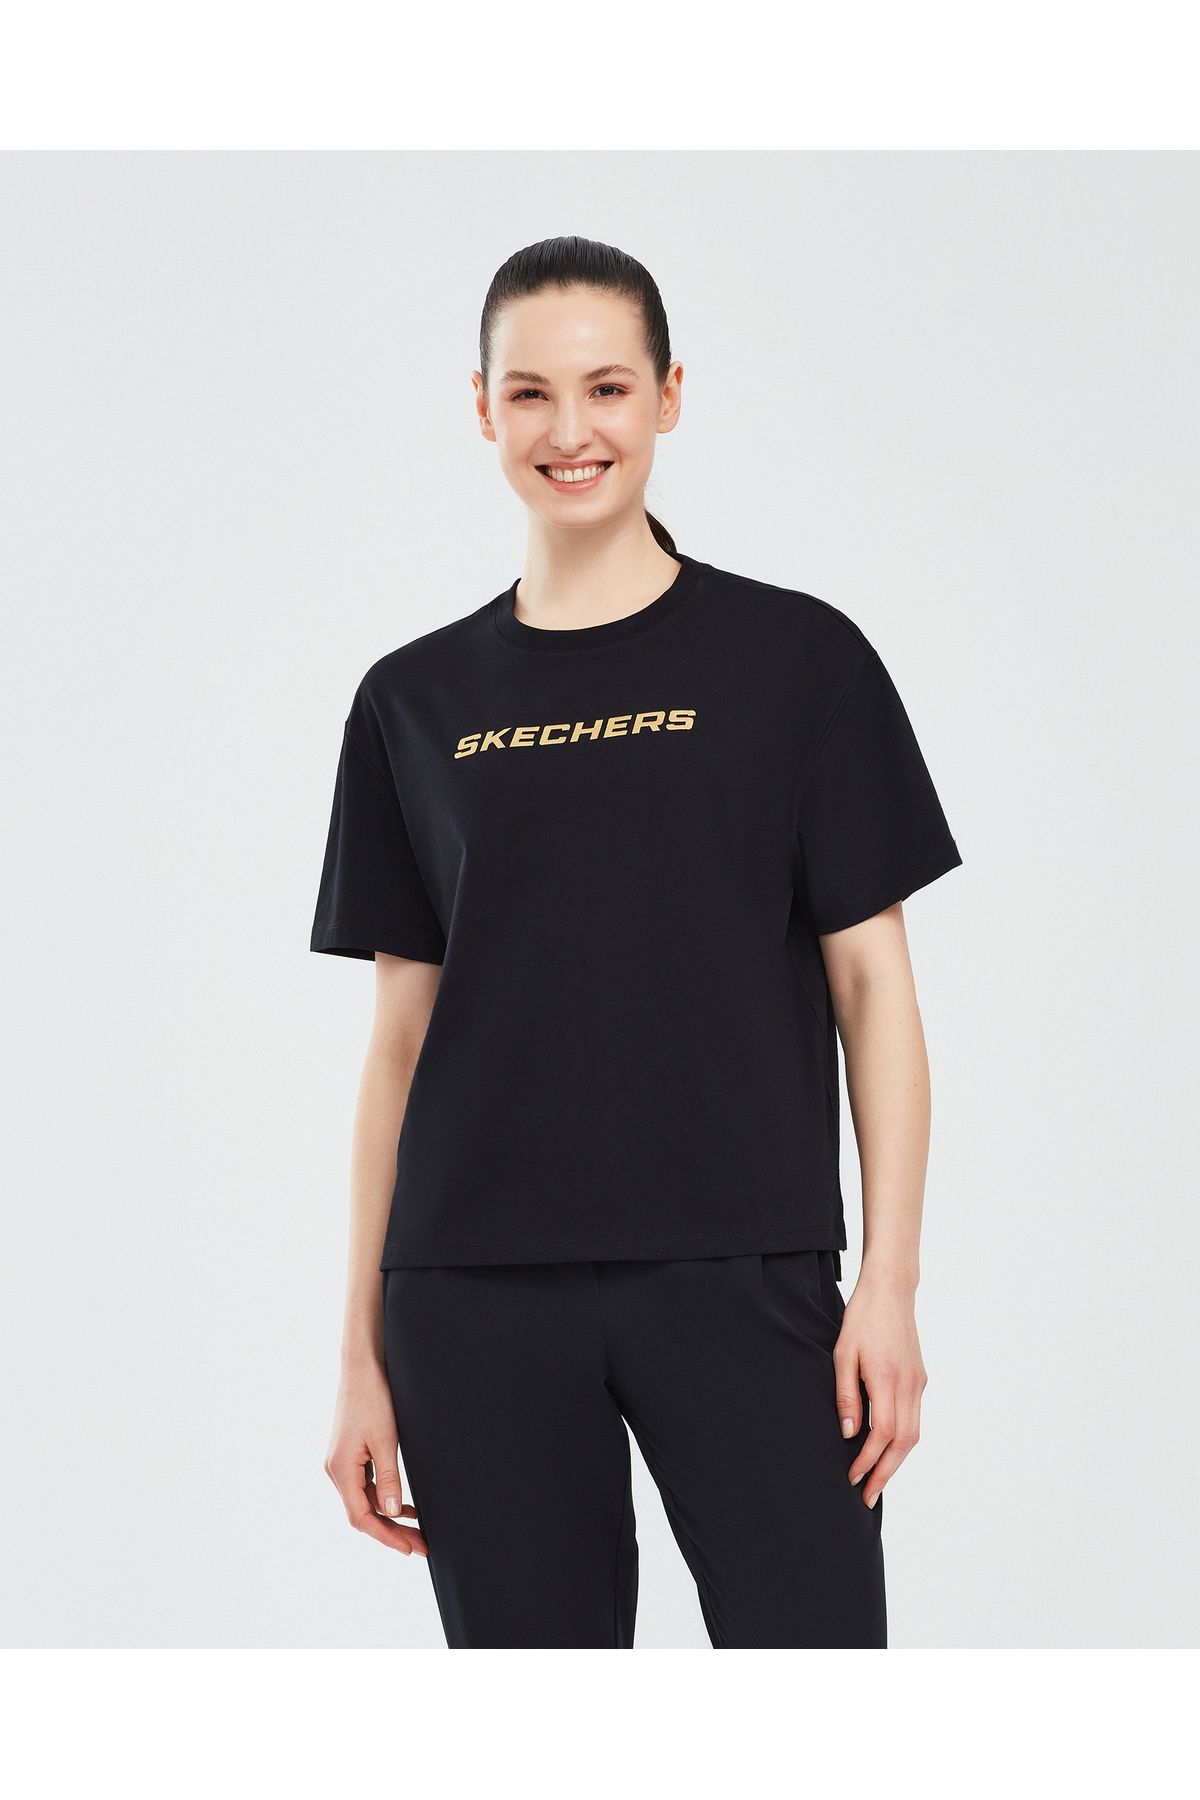 Skechers Graphic T-Shirt W Short Sleeve Kadın Siyah Tshirt S241012-001